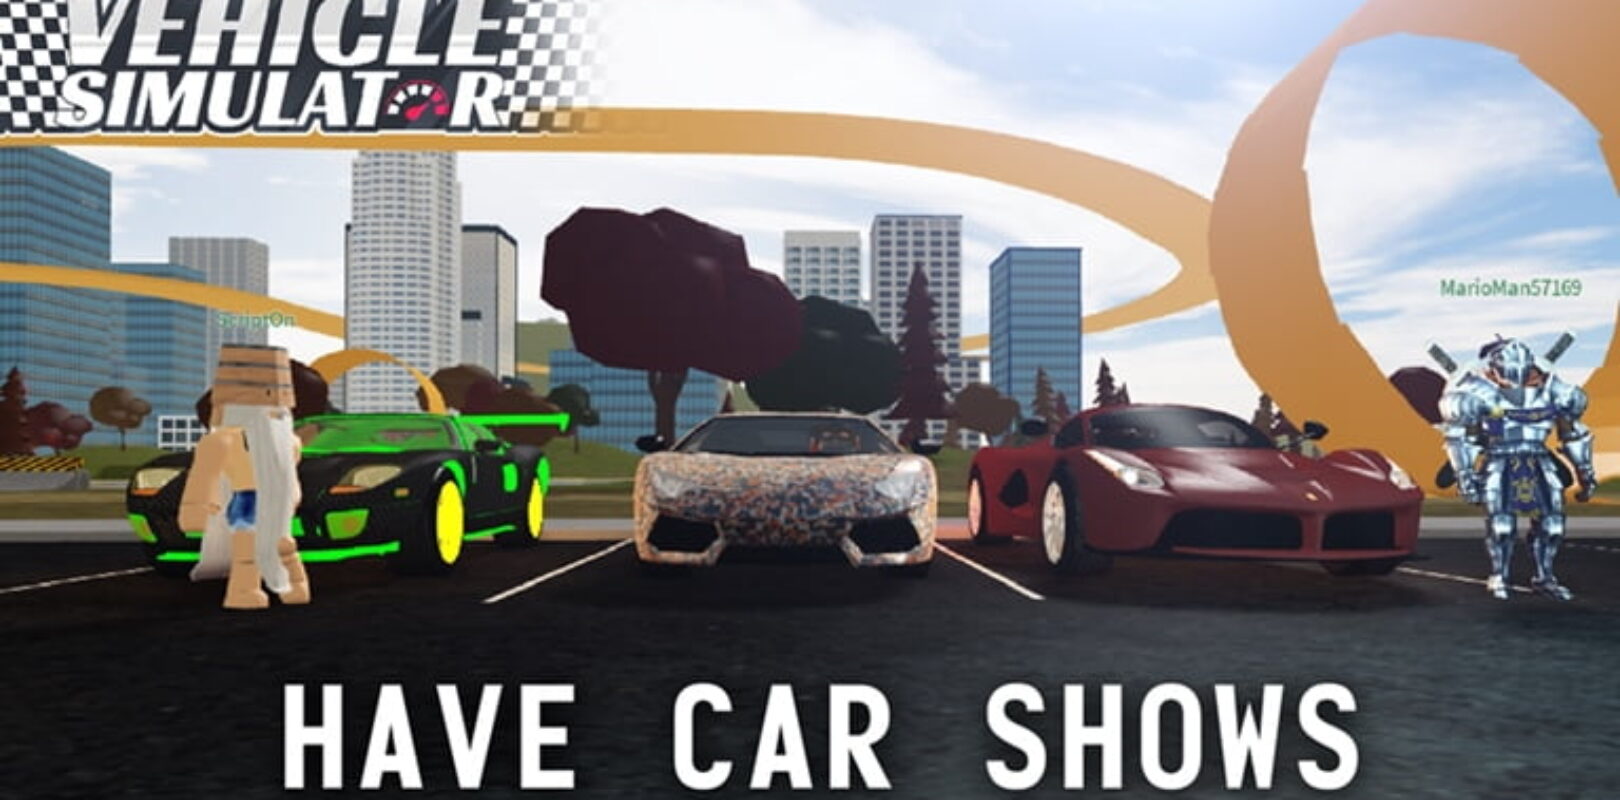 Vehicle Simulator Codes 2020 Pivotal Gamers - roblox vehicle simulator codes 2019 july